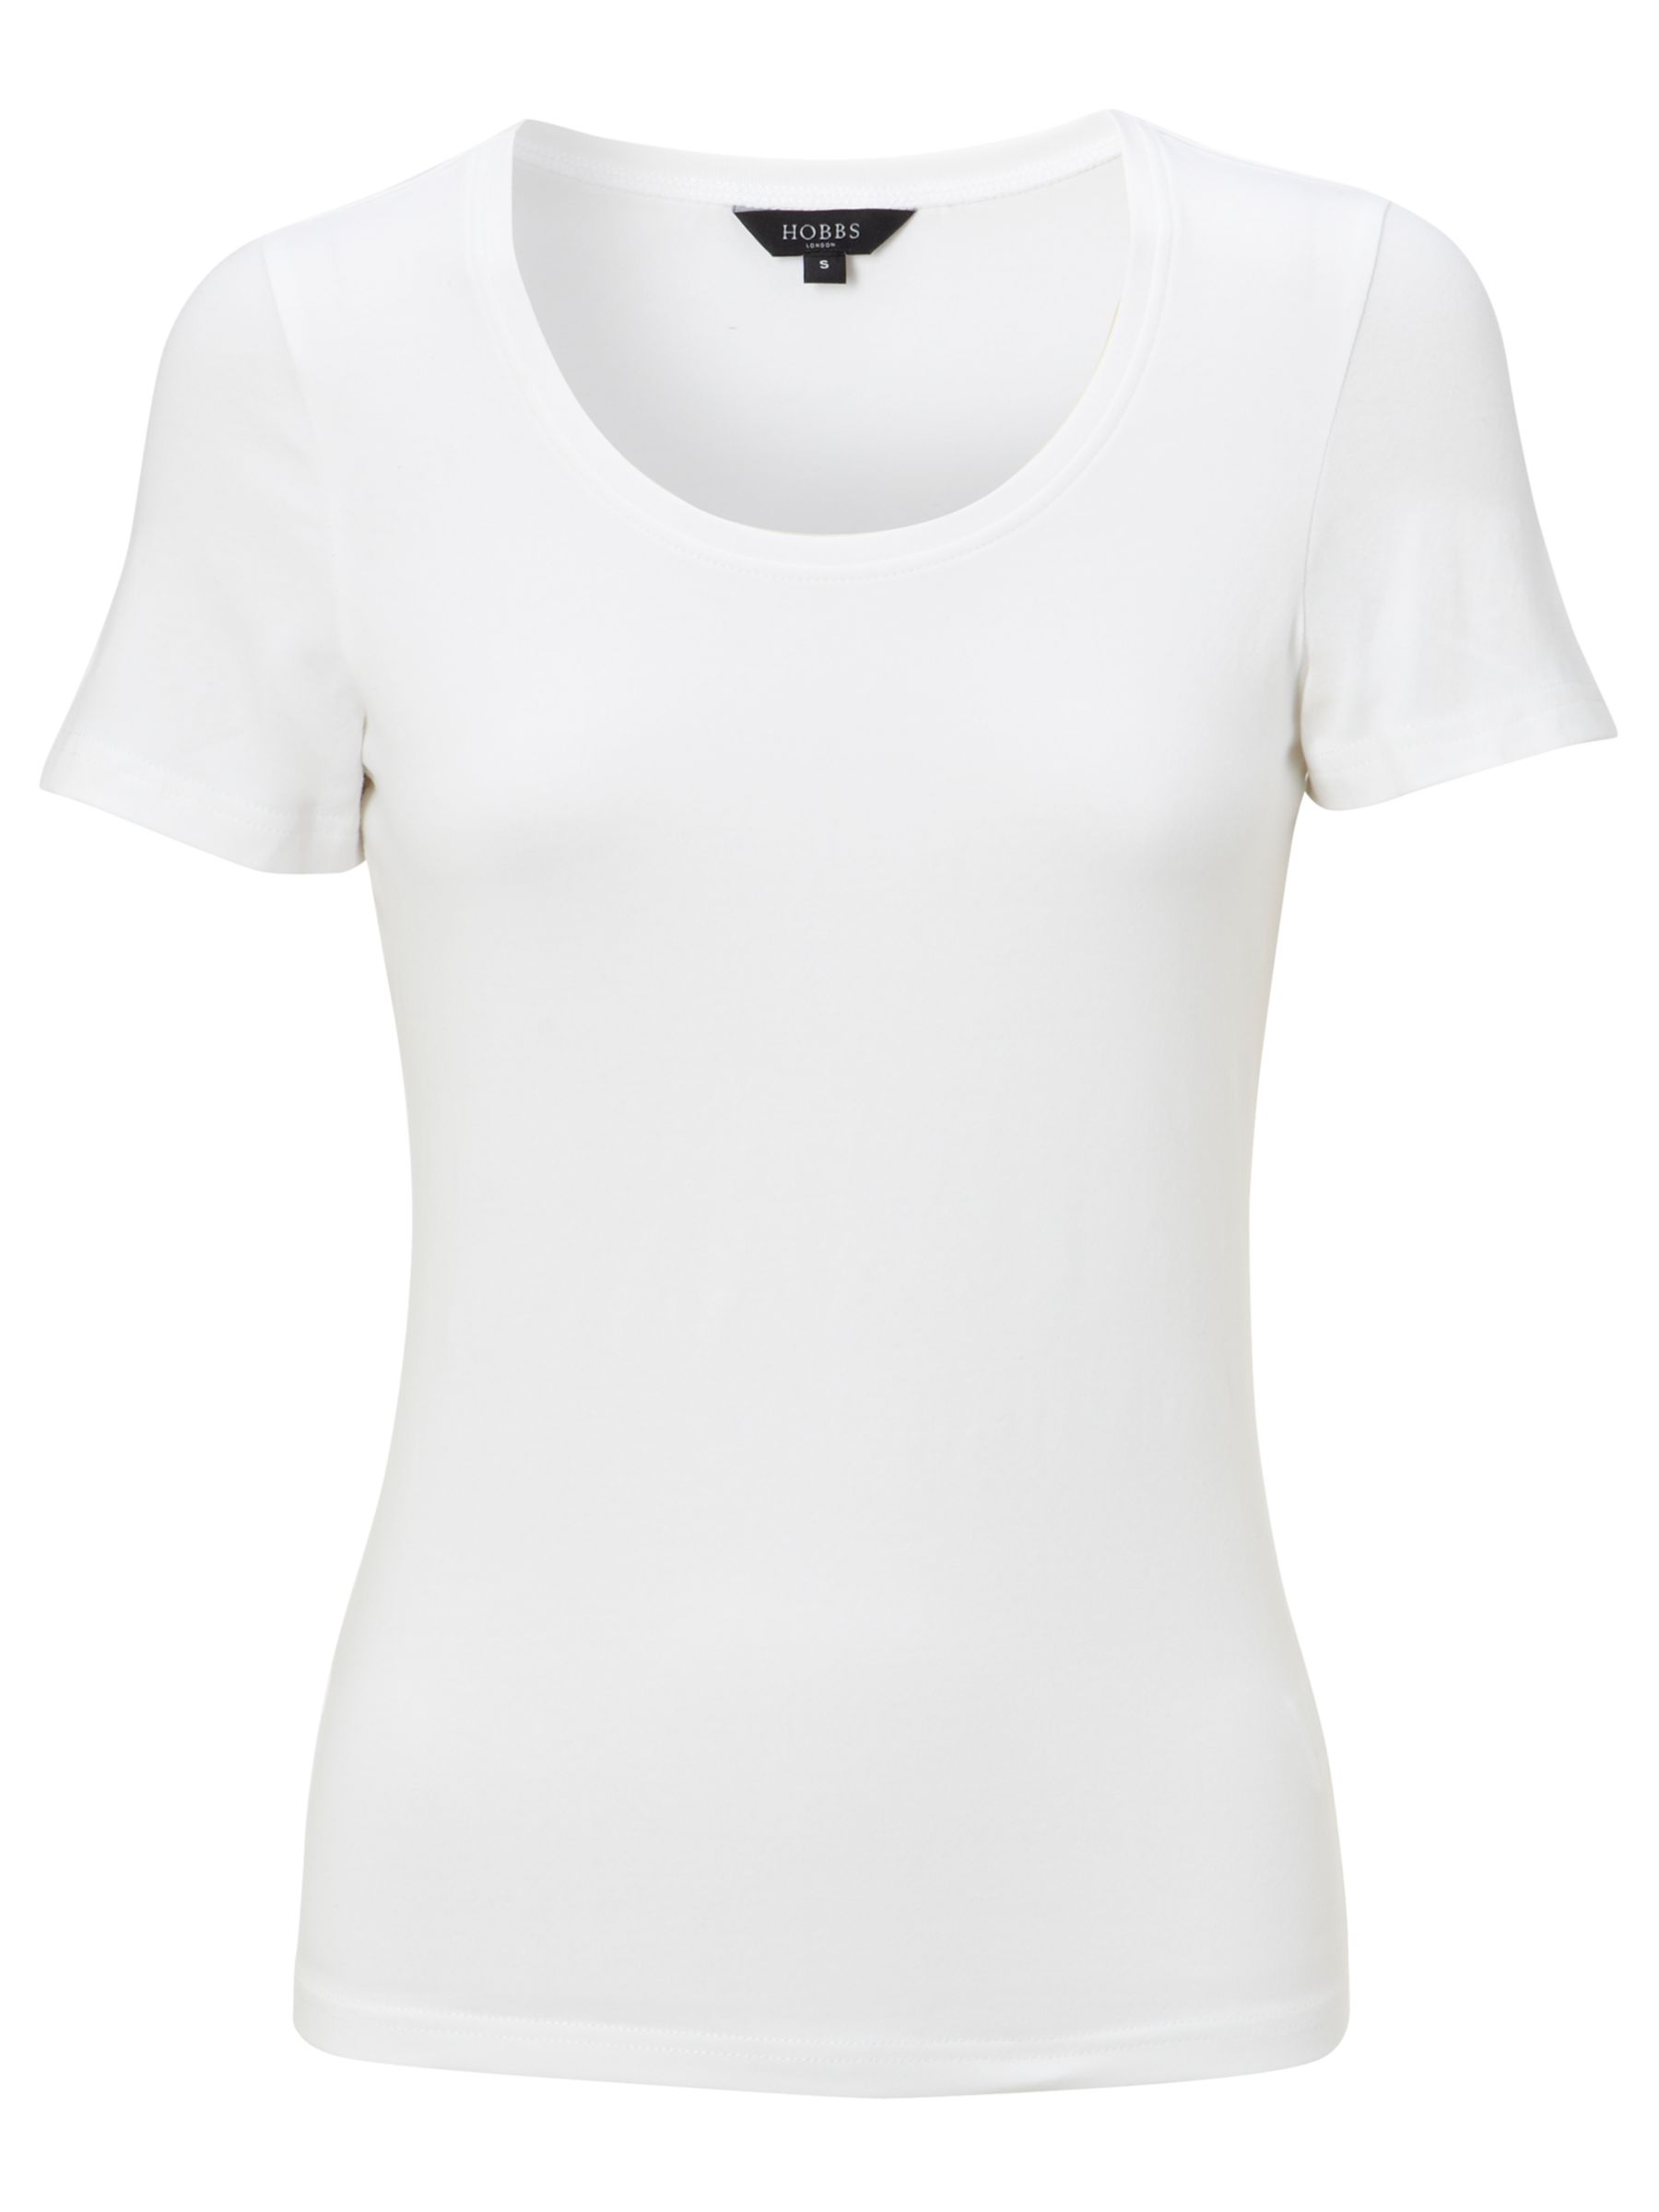 Shannon T-Shirt, White